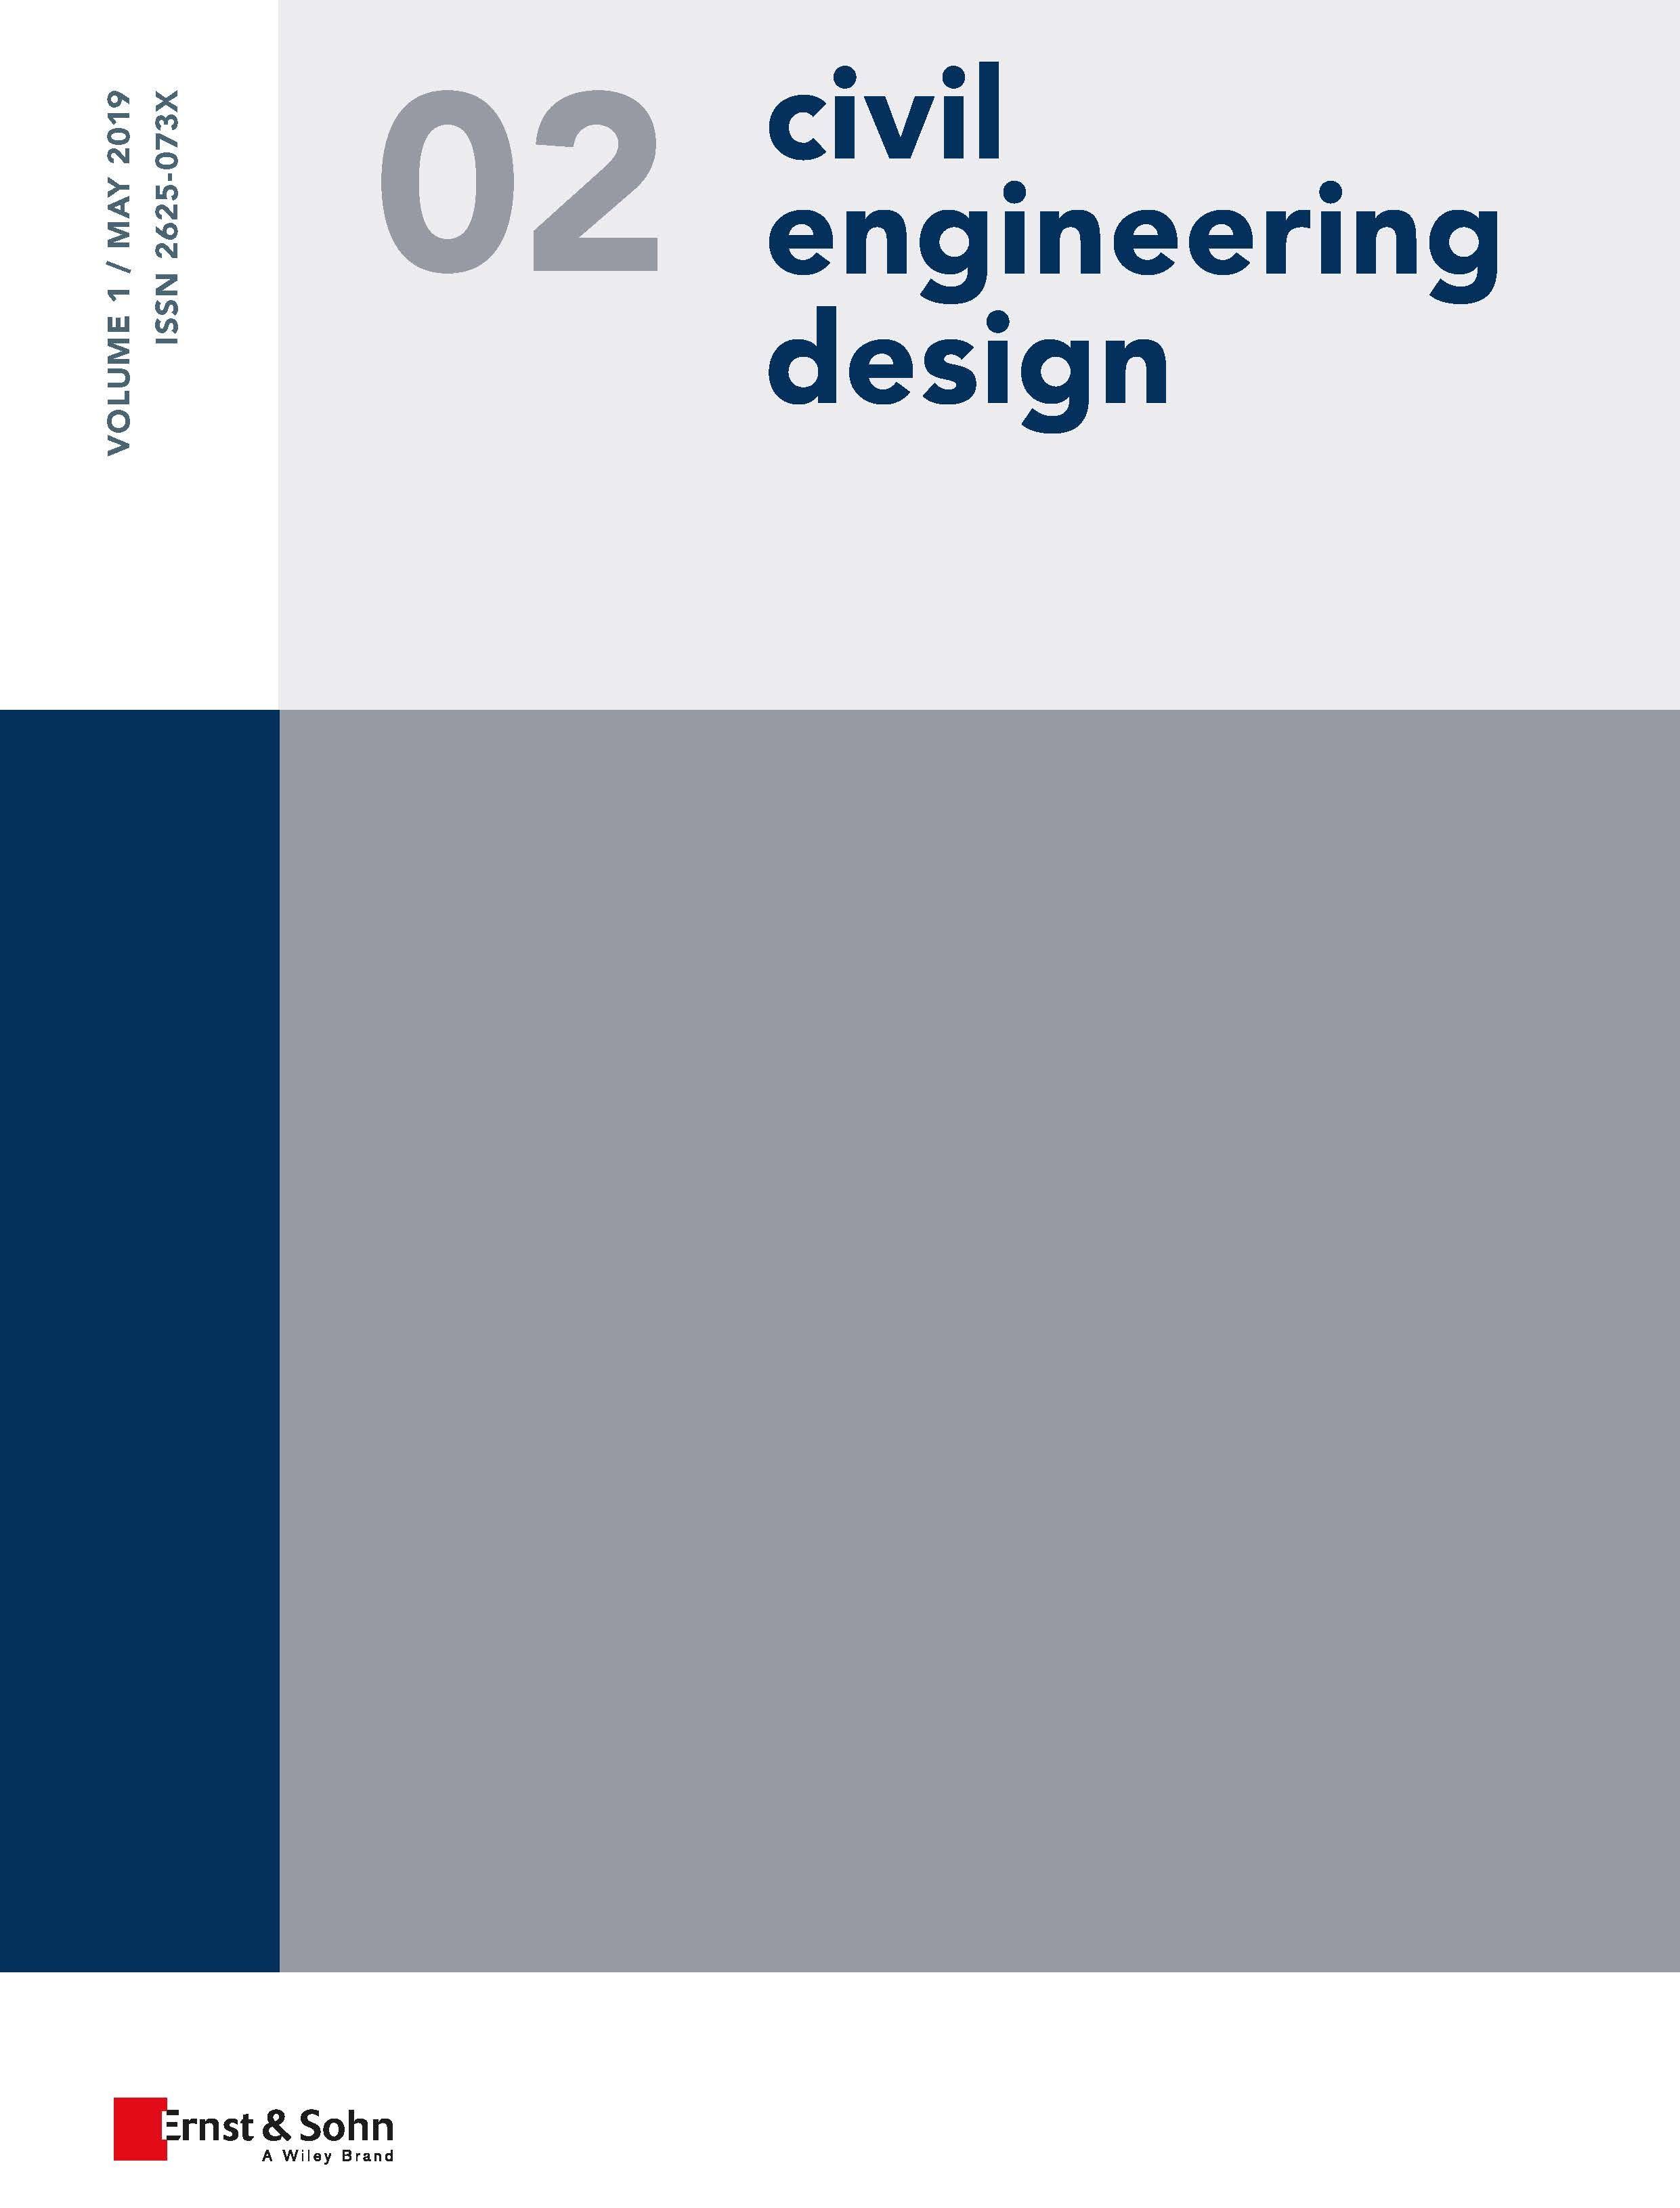 Civil Engineering Design 2/2019 published